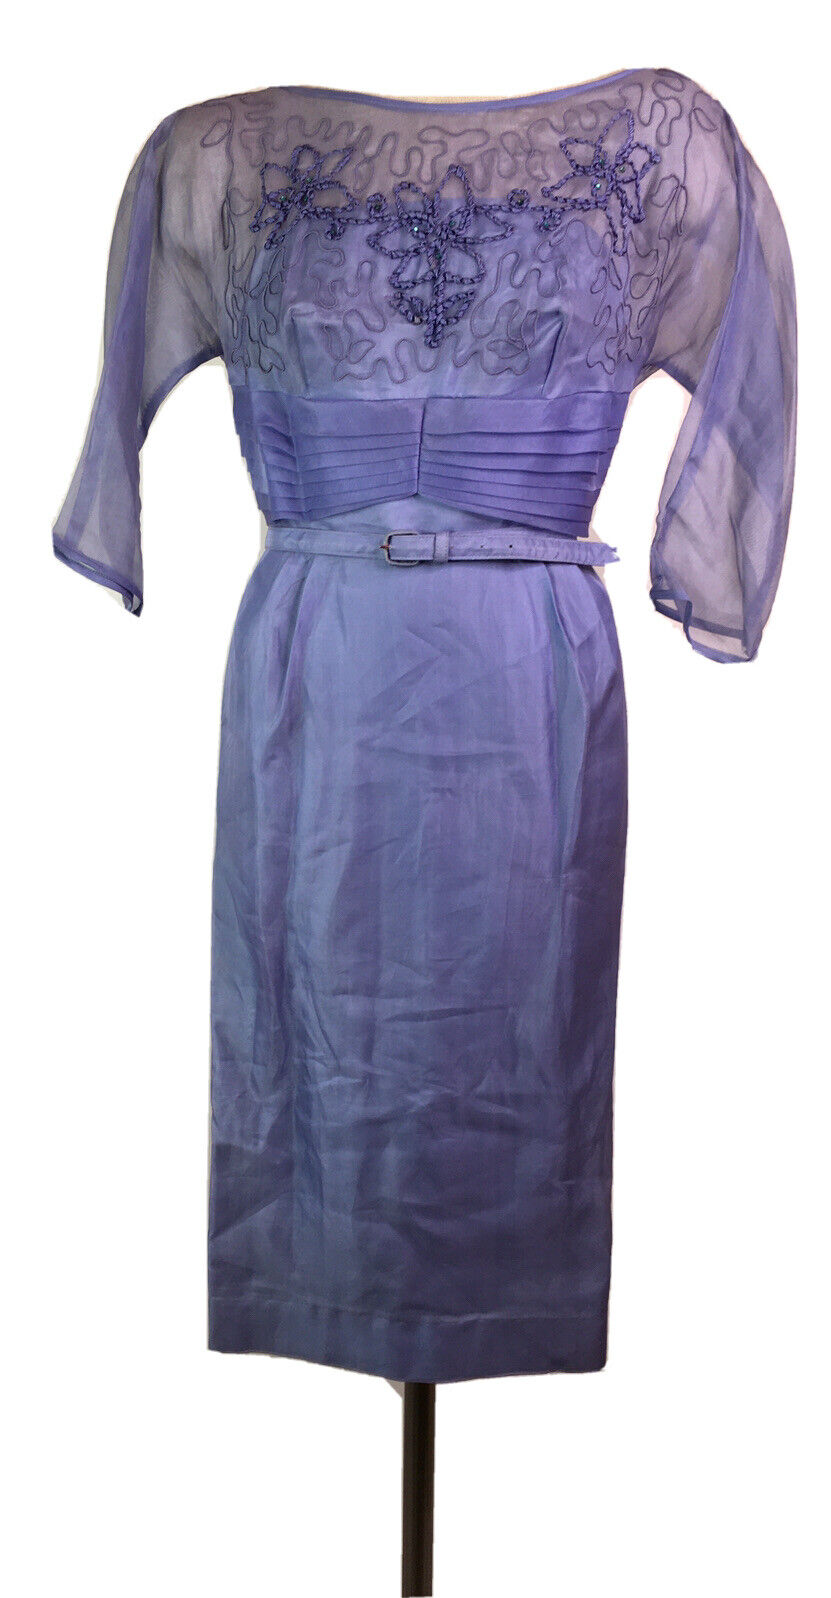 VTG Aldens 60s Pencil Skirt Dress Embroidery Size 14 Large Periwinkle Blue